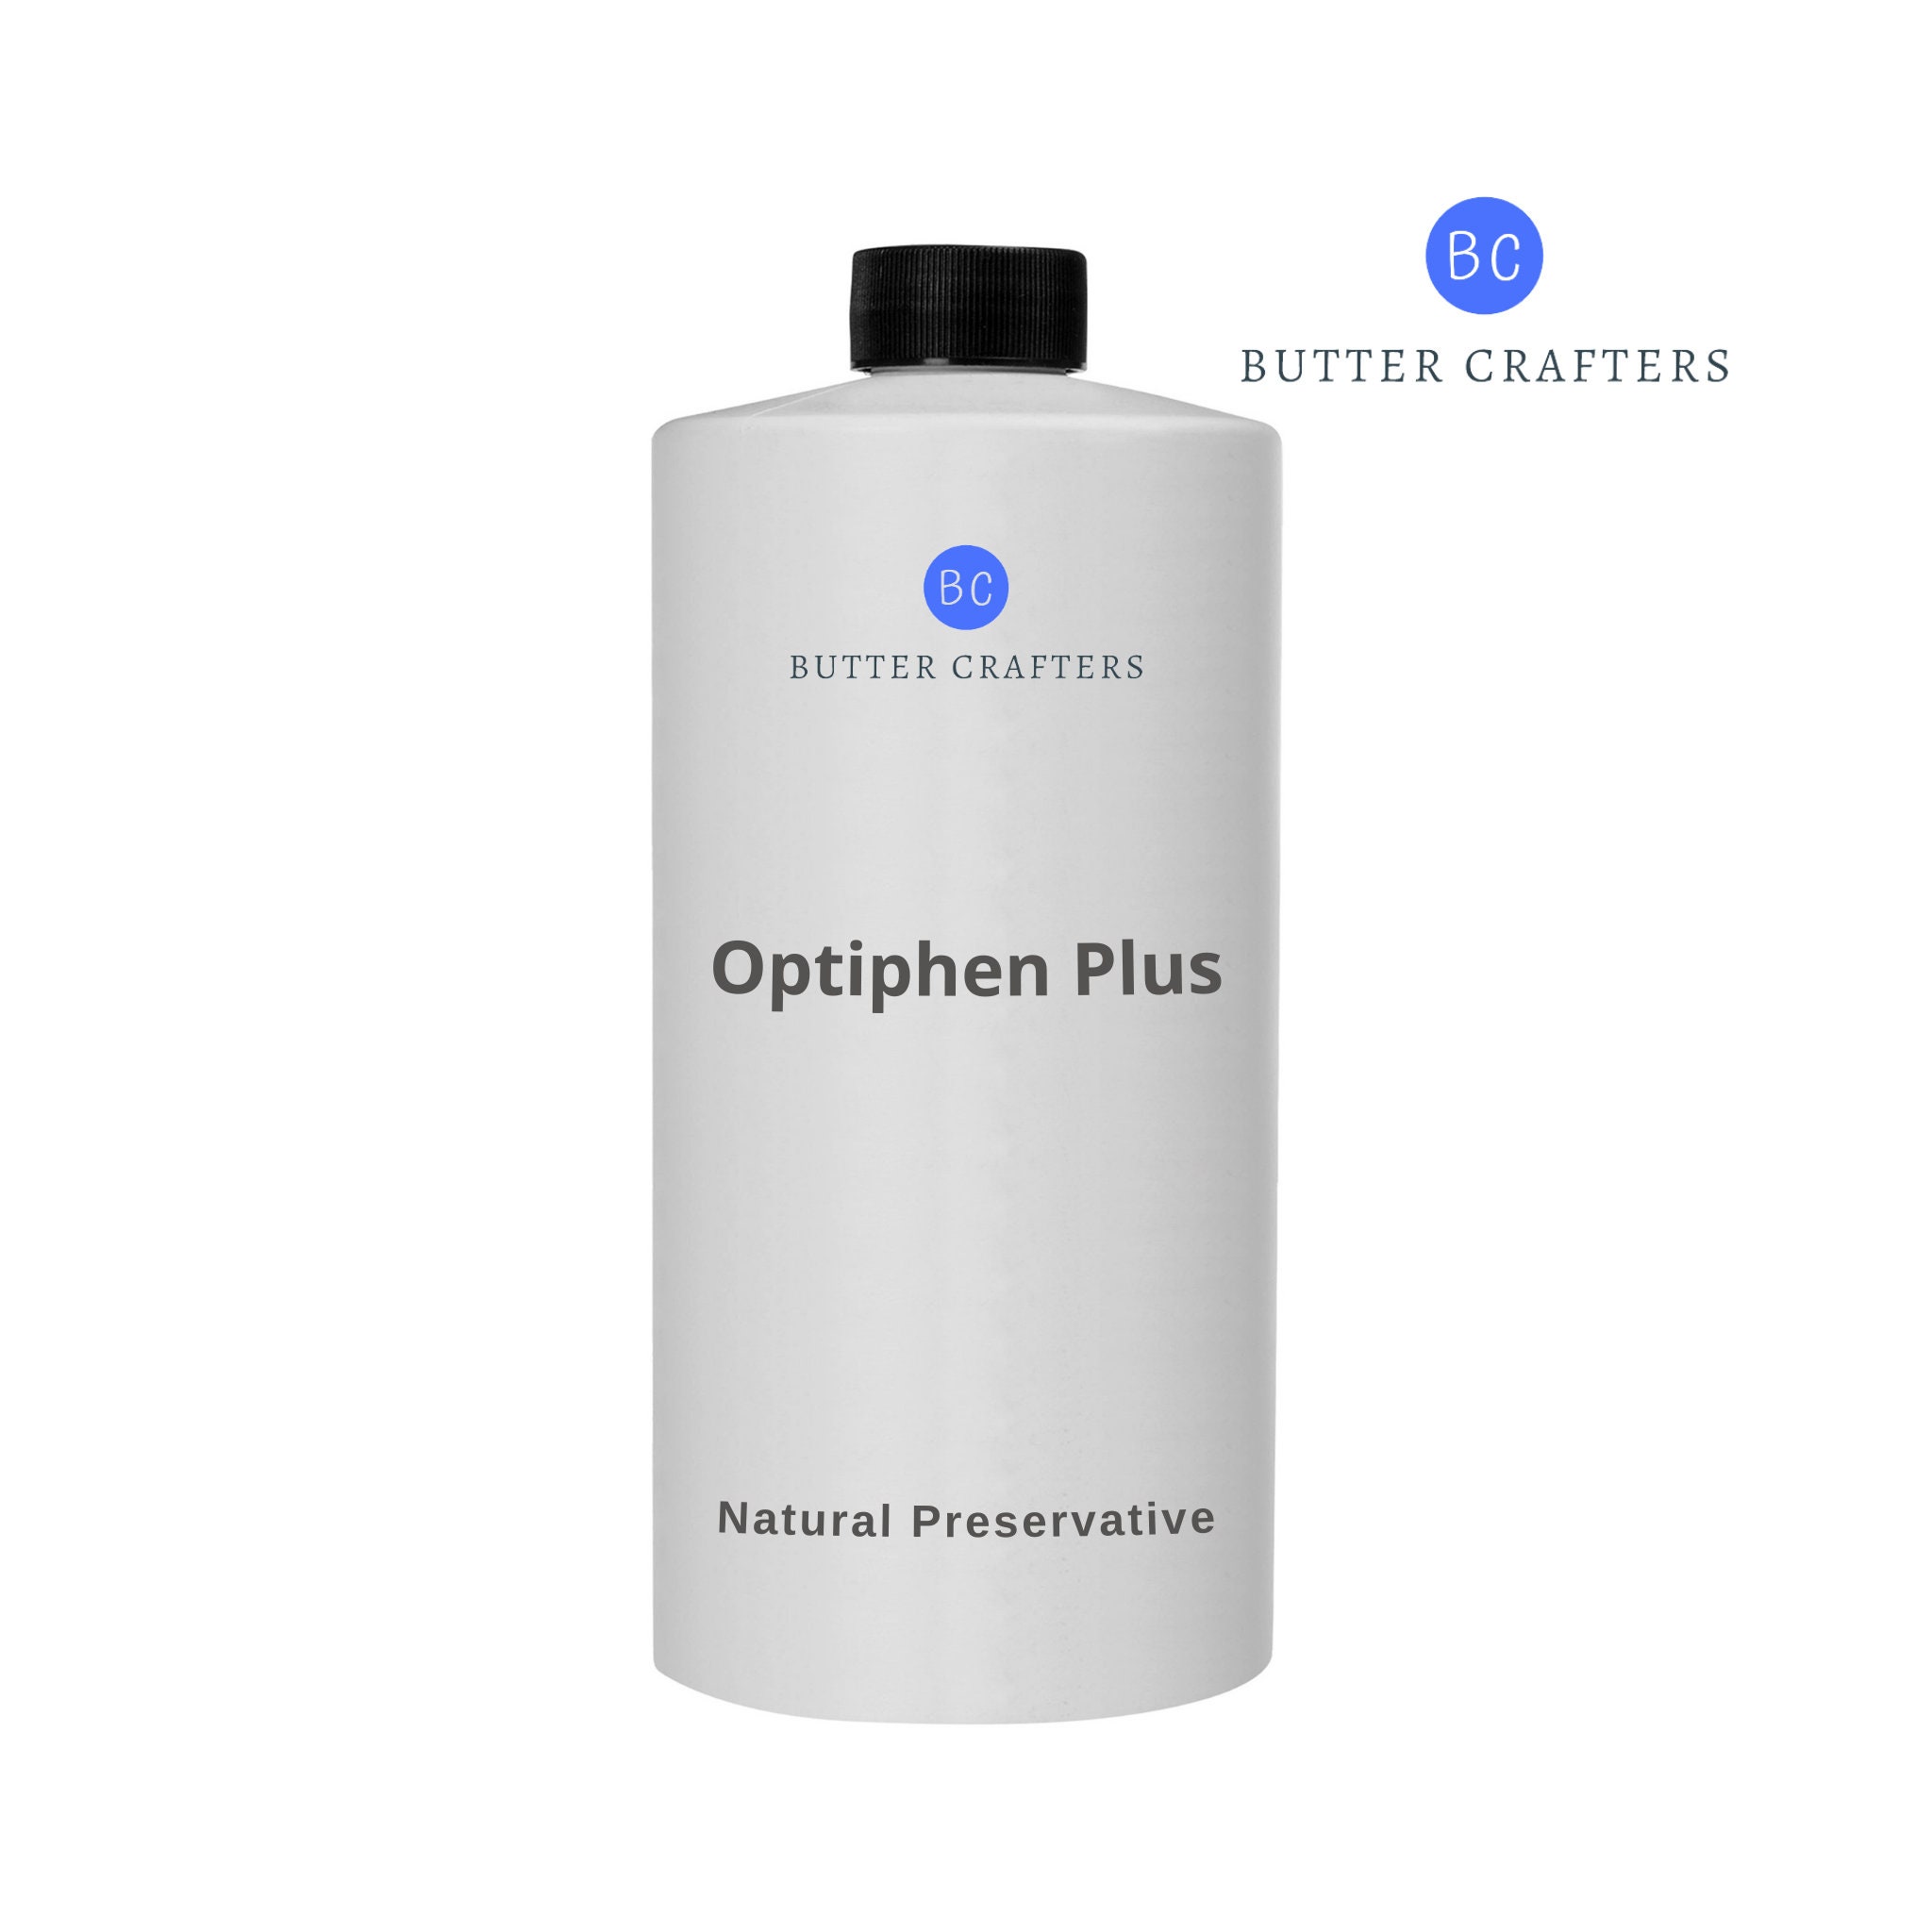 Optiphen Plus Preservative 100% Natural Paraben Free Lotion Body